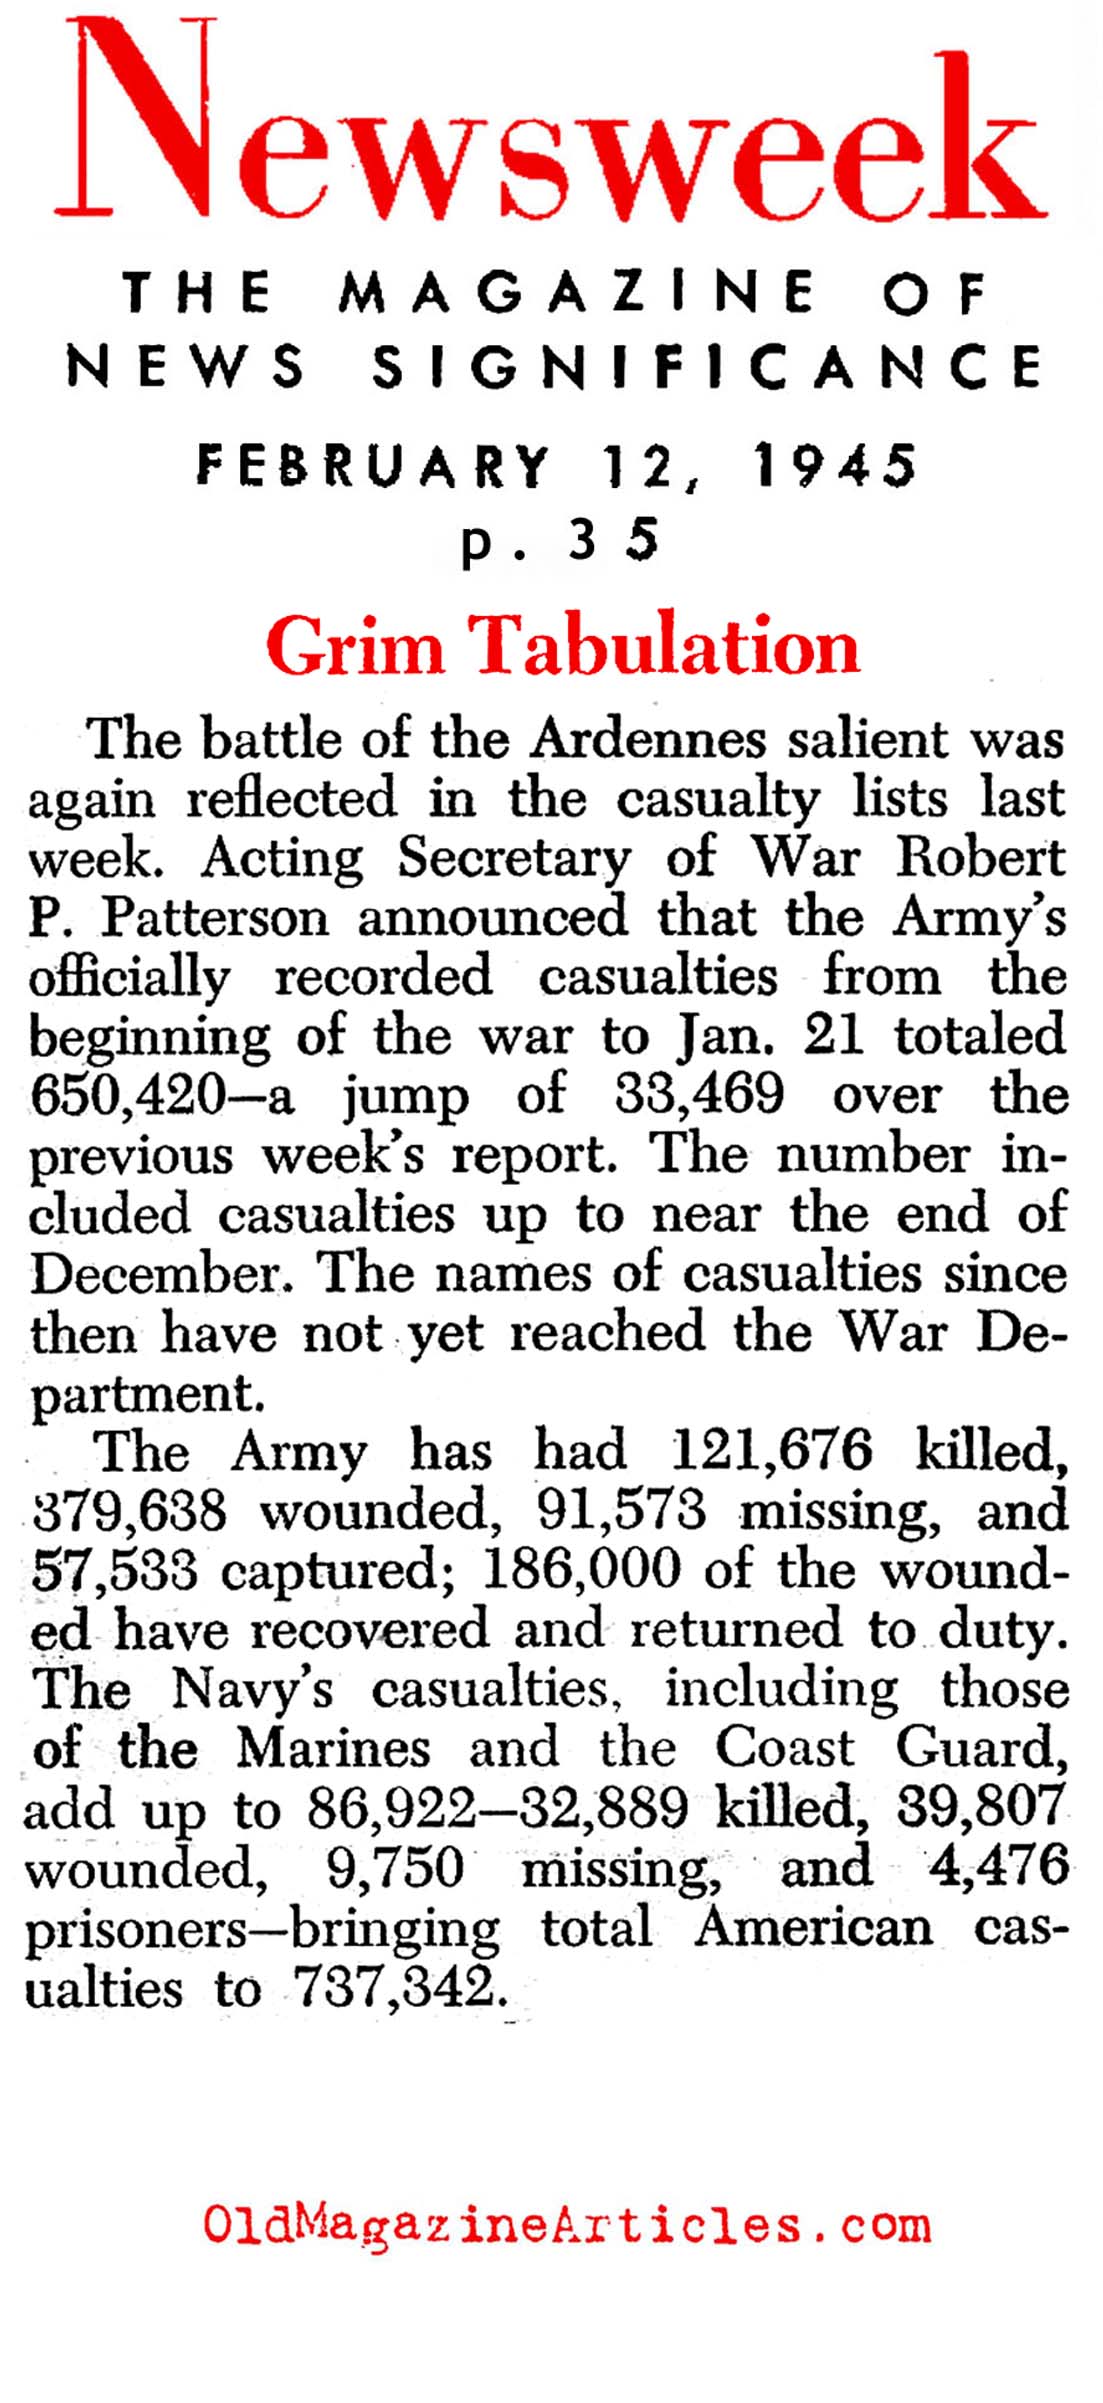 U.S. Army Casualties: 1941 - 1944 (United States News, 1944)